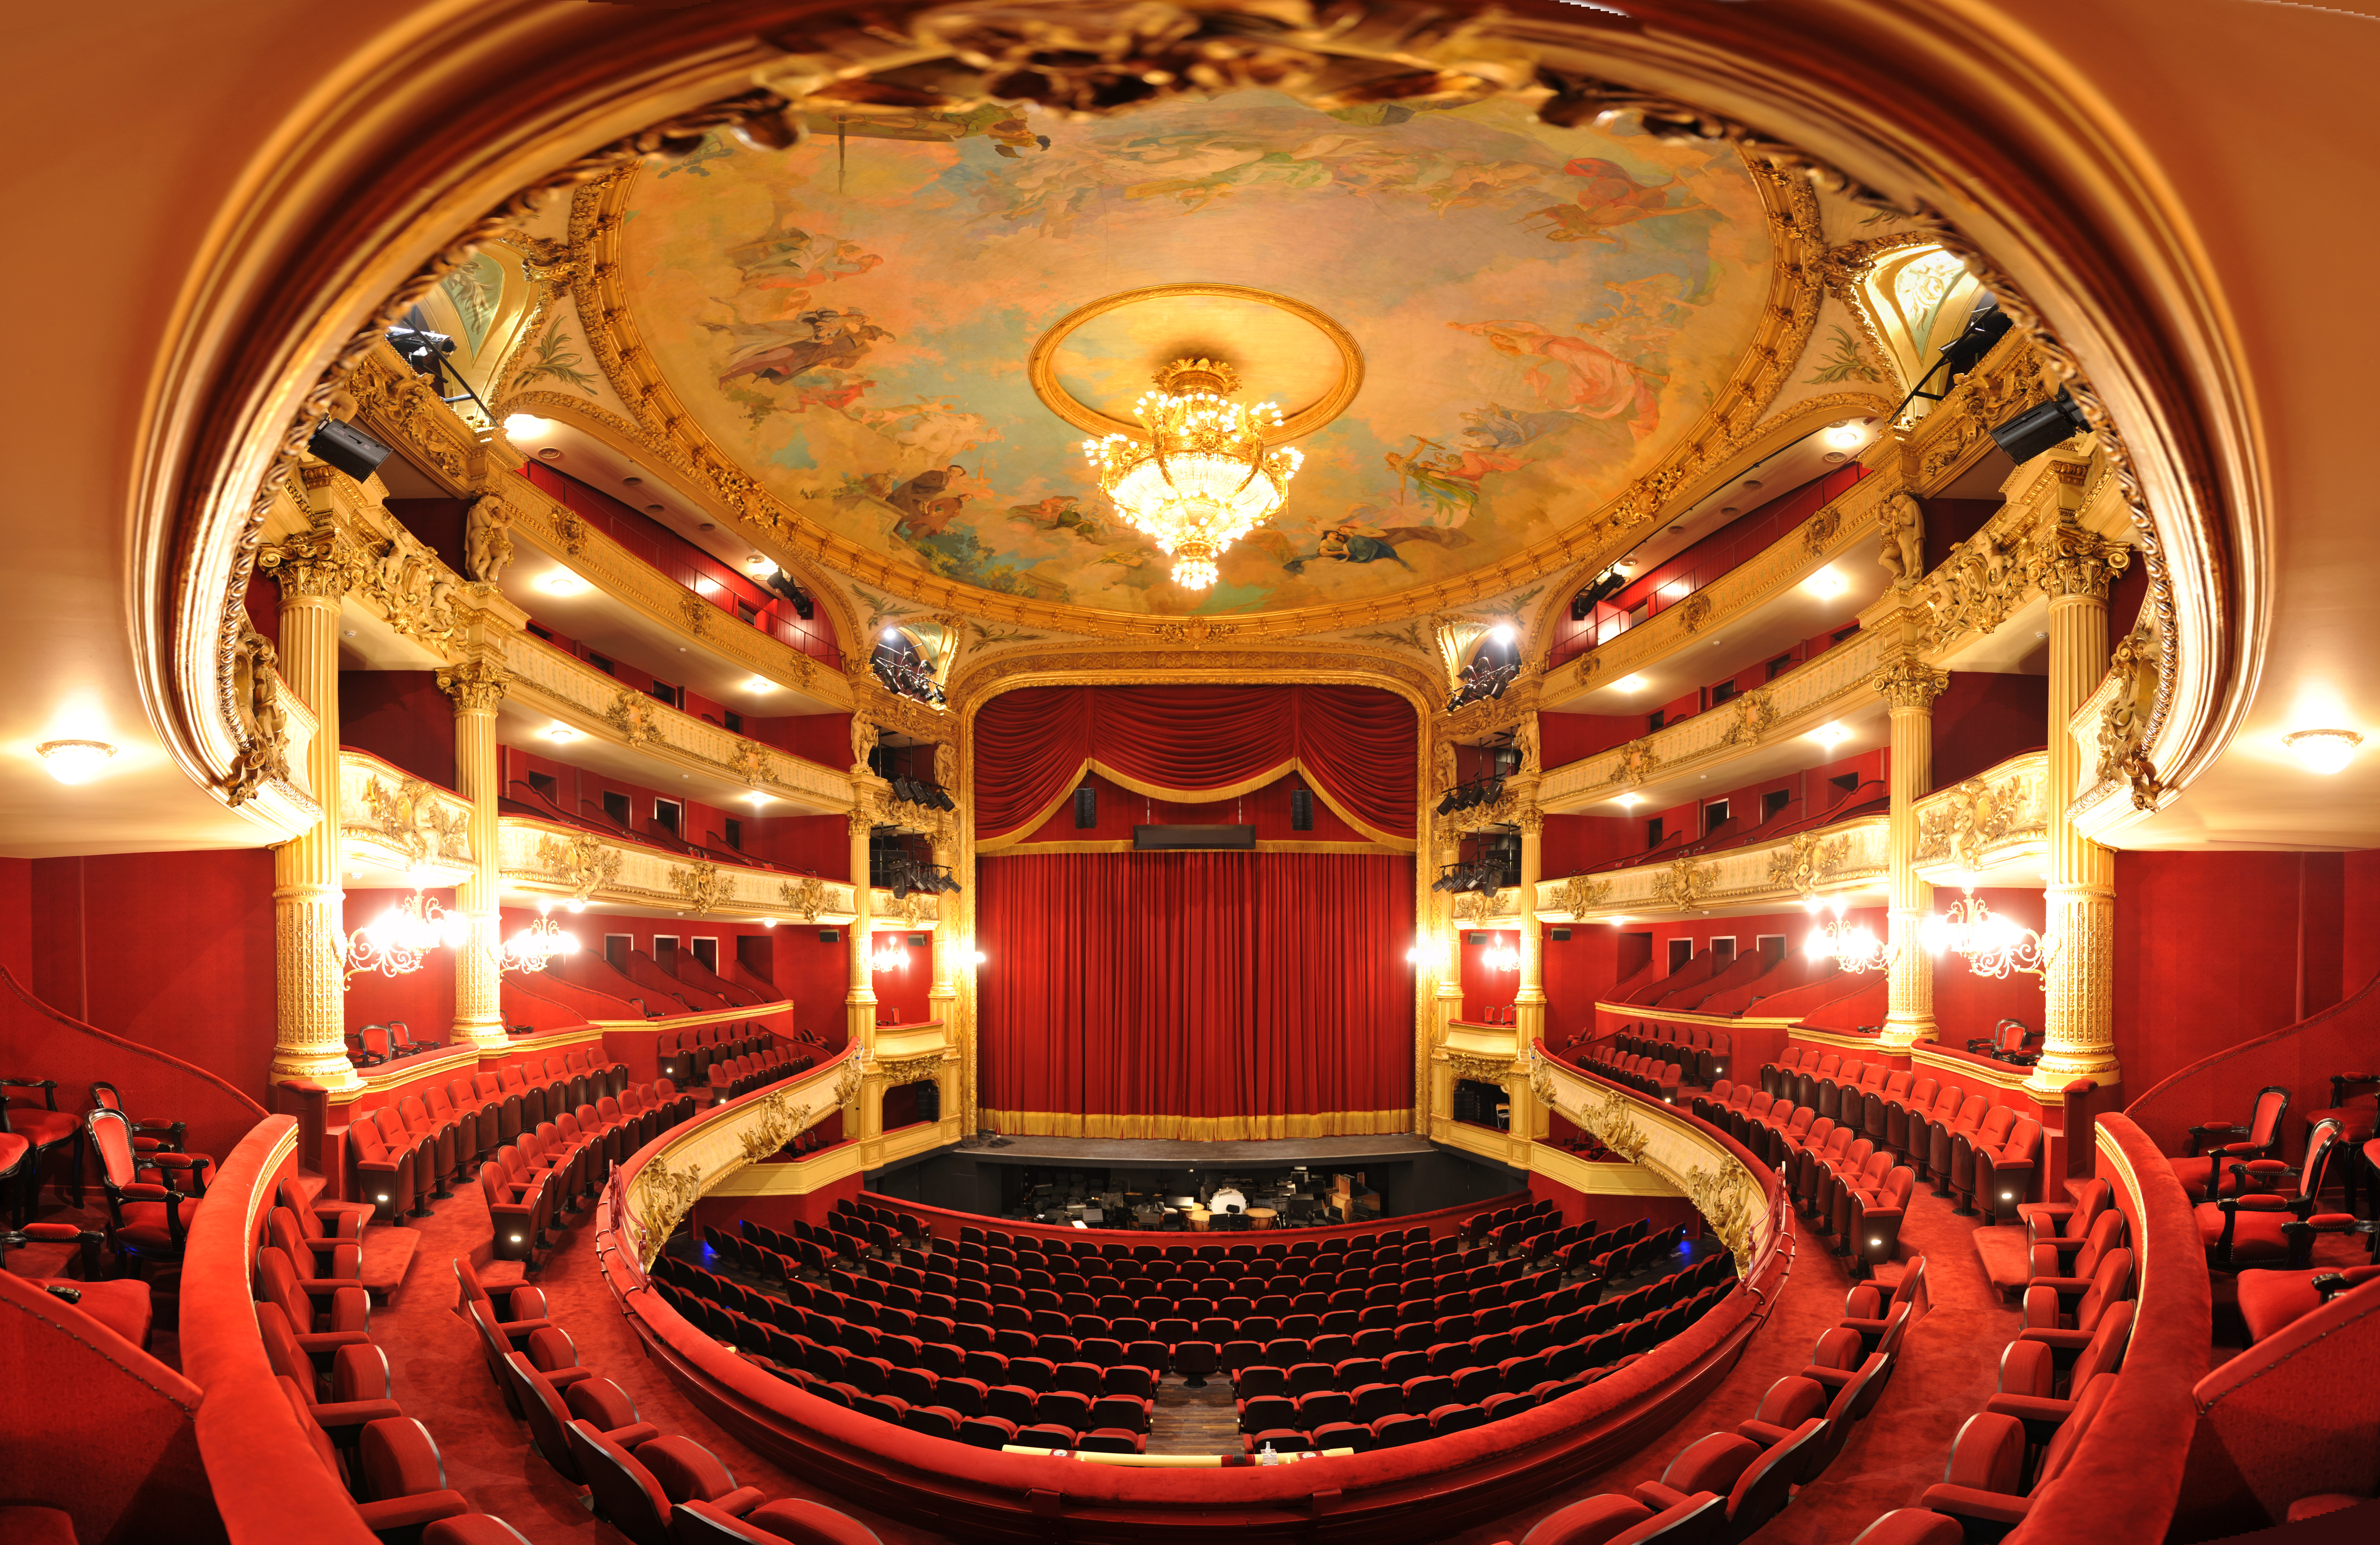 Superb room in the The Théâtre Royal de Liège, home to the Opéra Royal de Wallonie